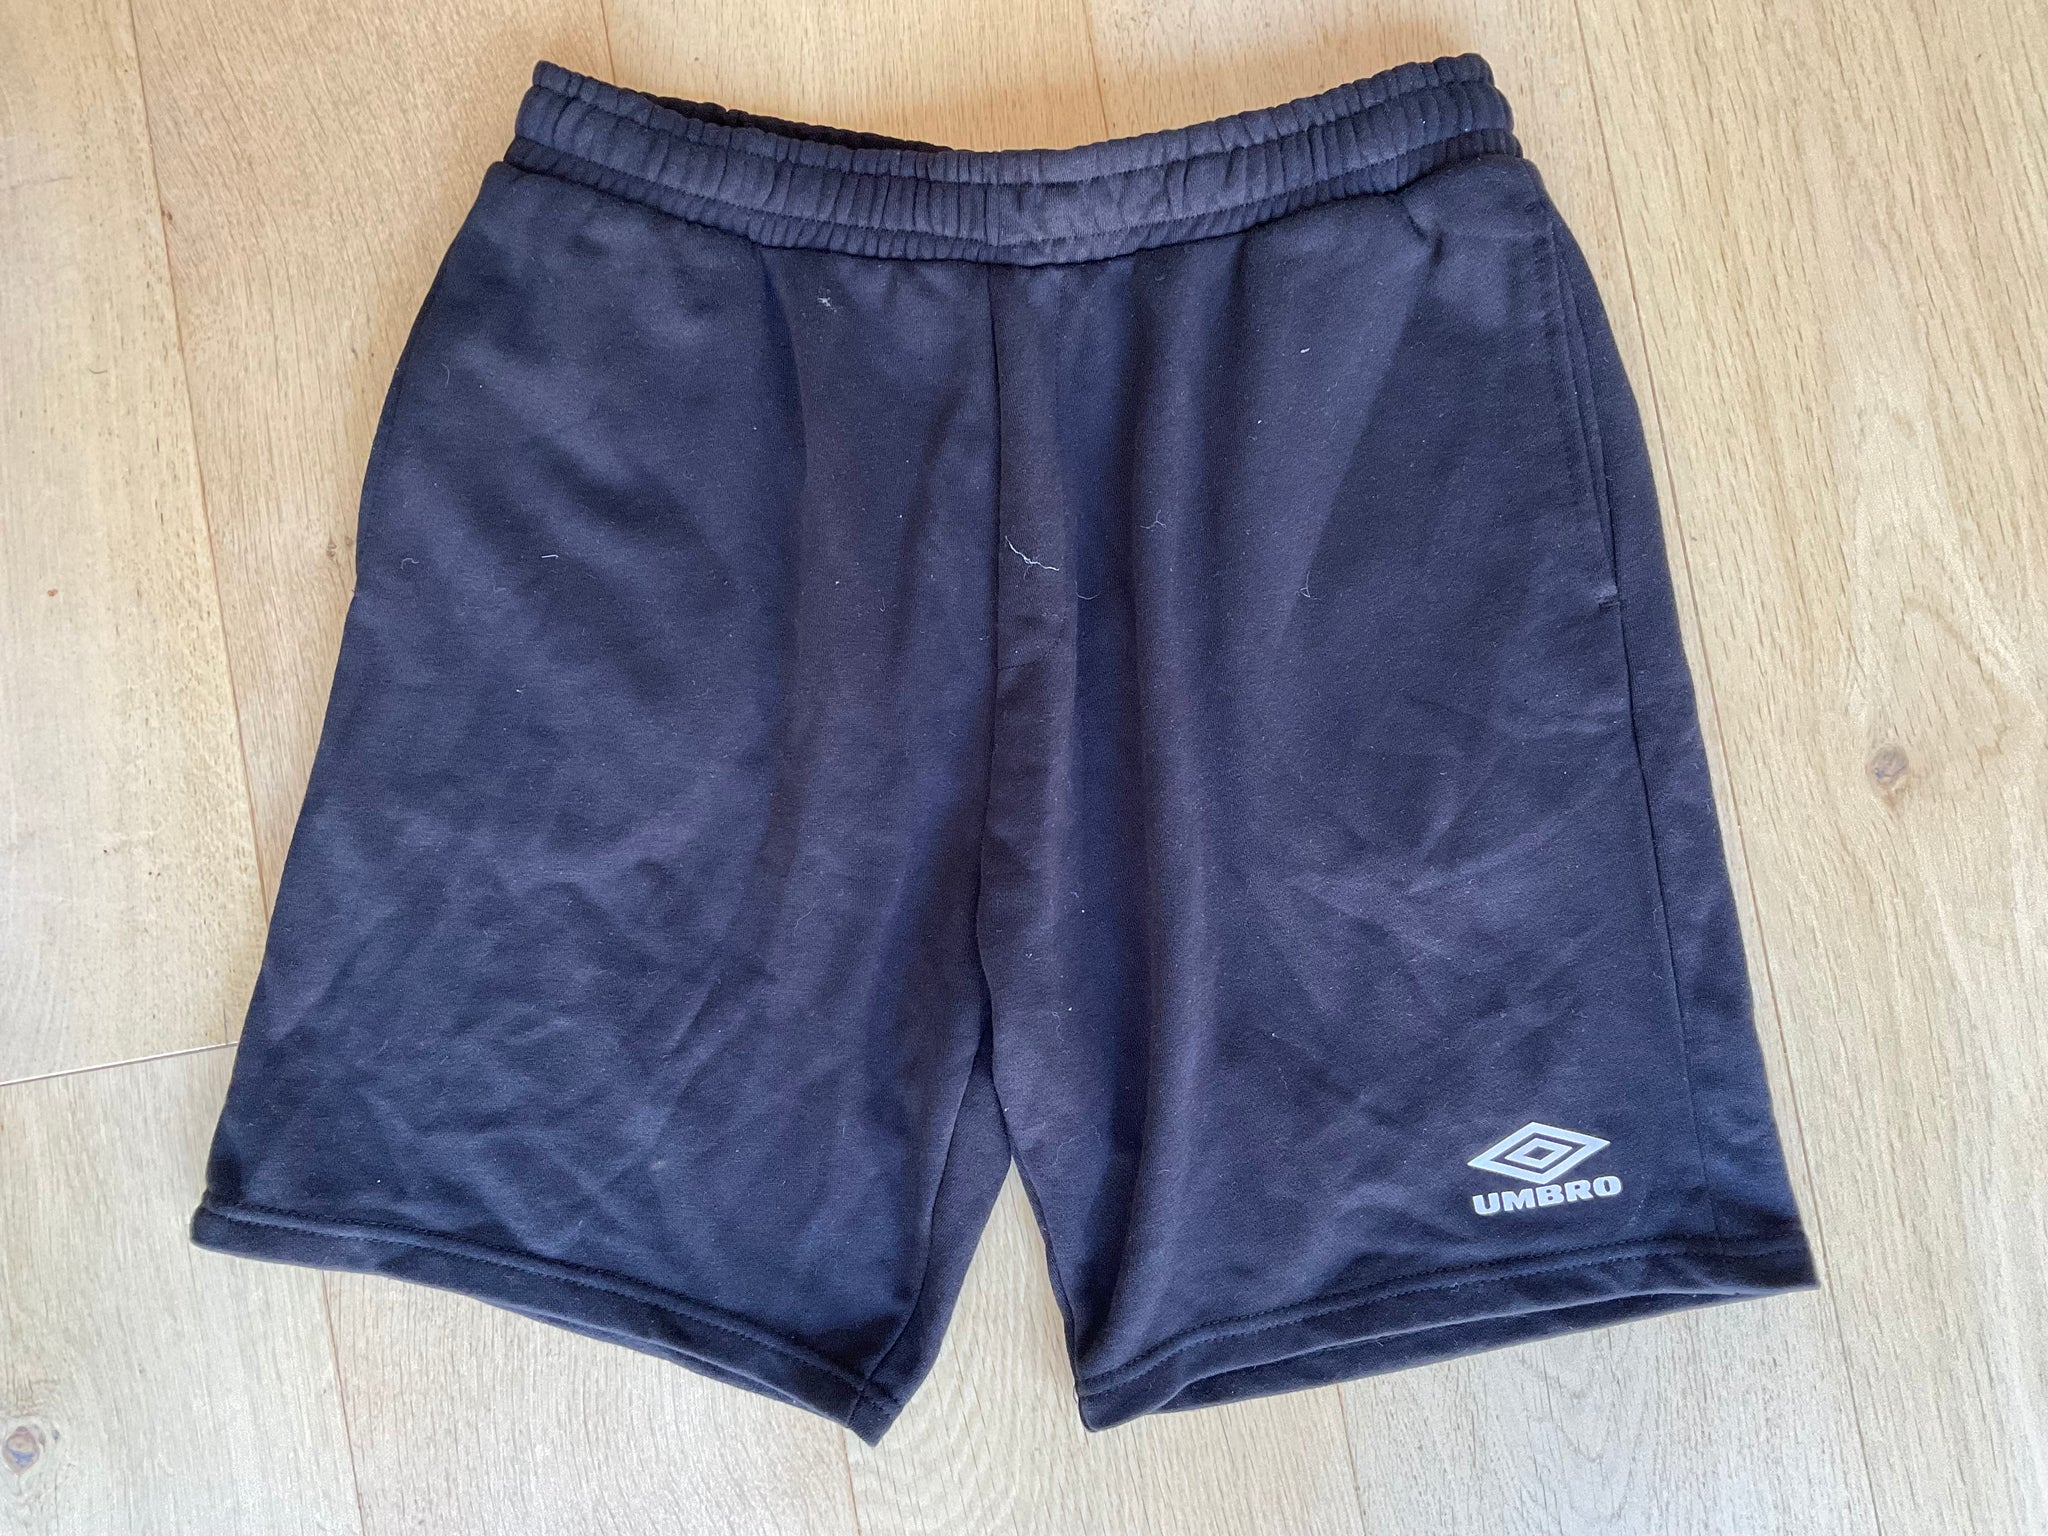 England Rugby - Fleece / Jog Shorts [Black]